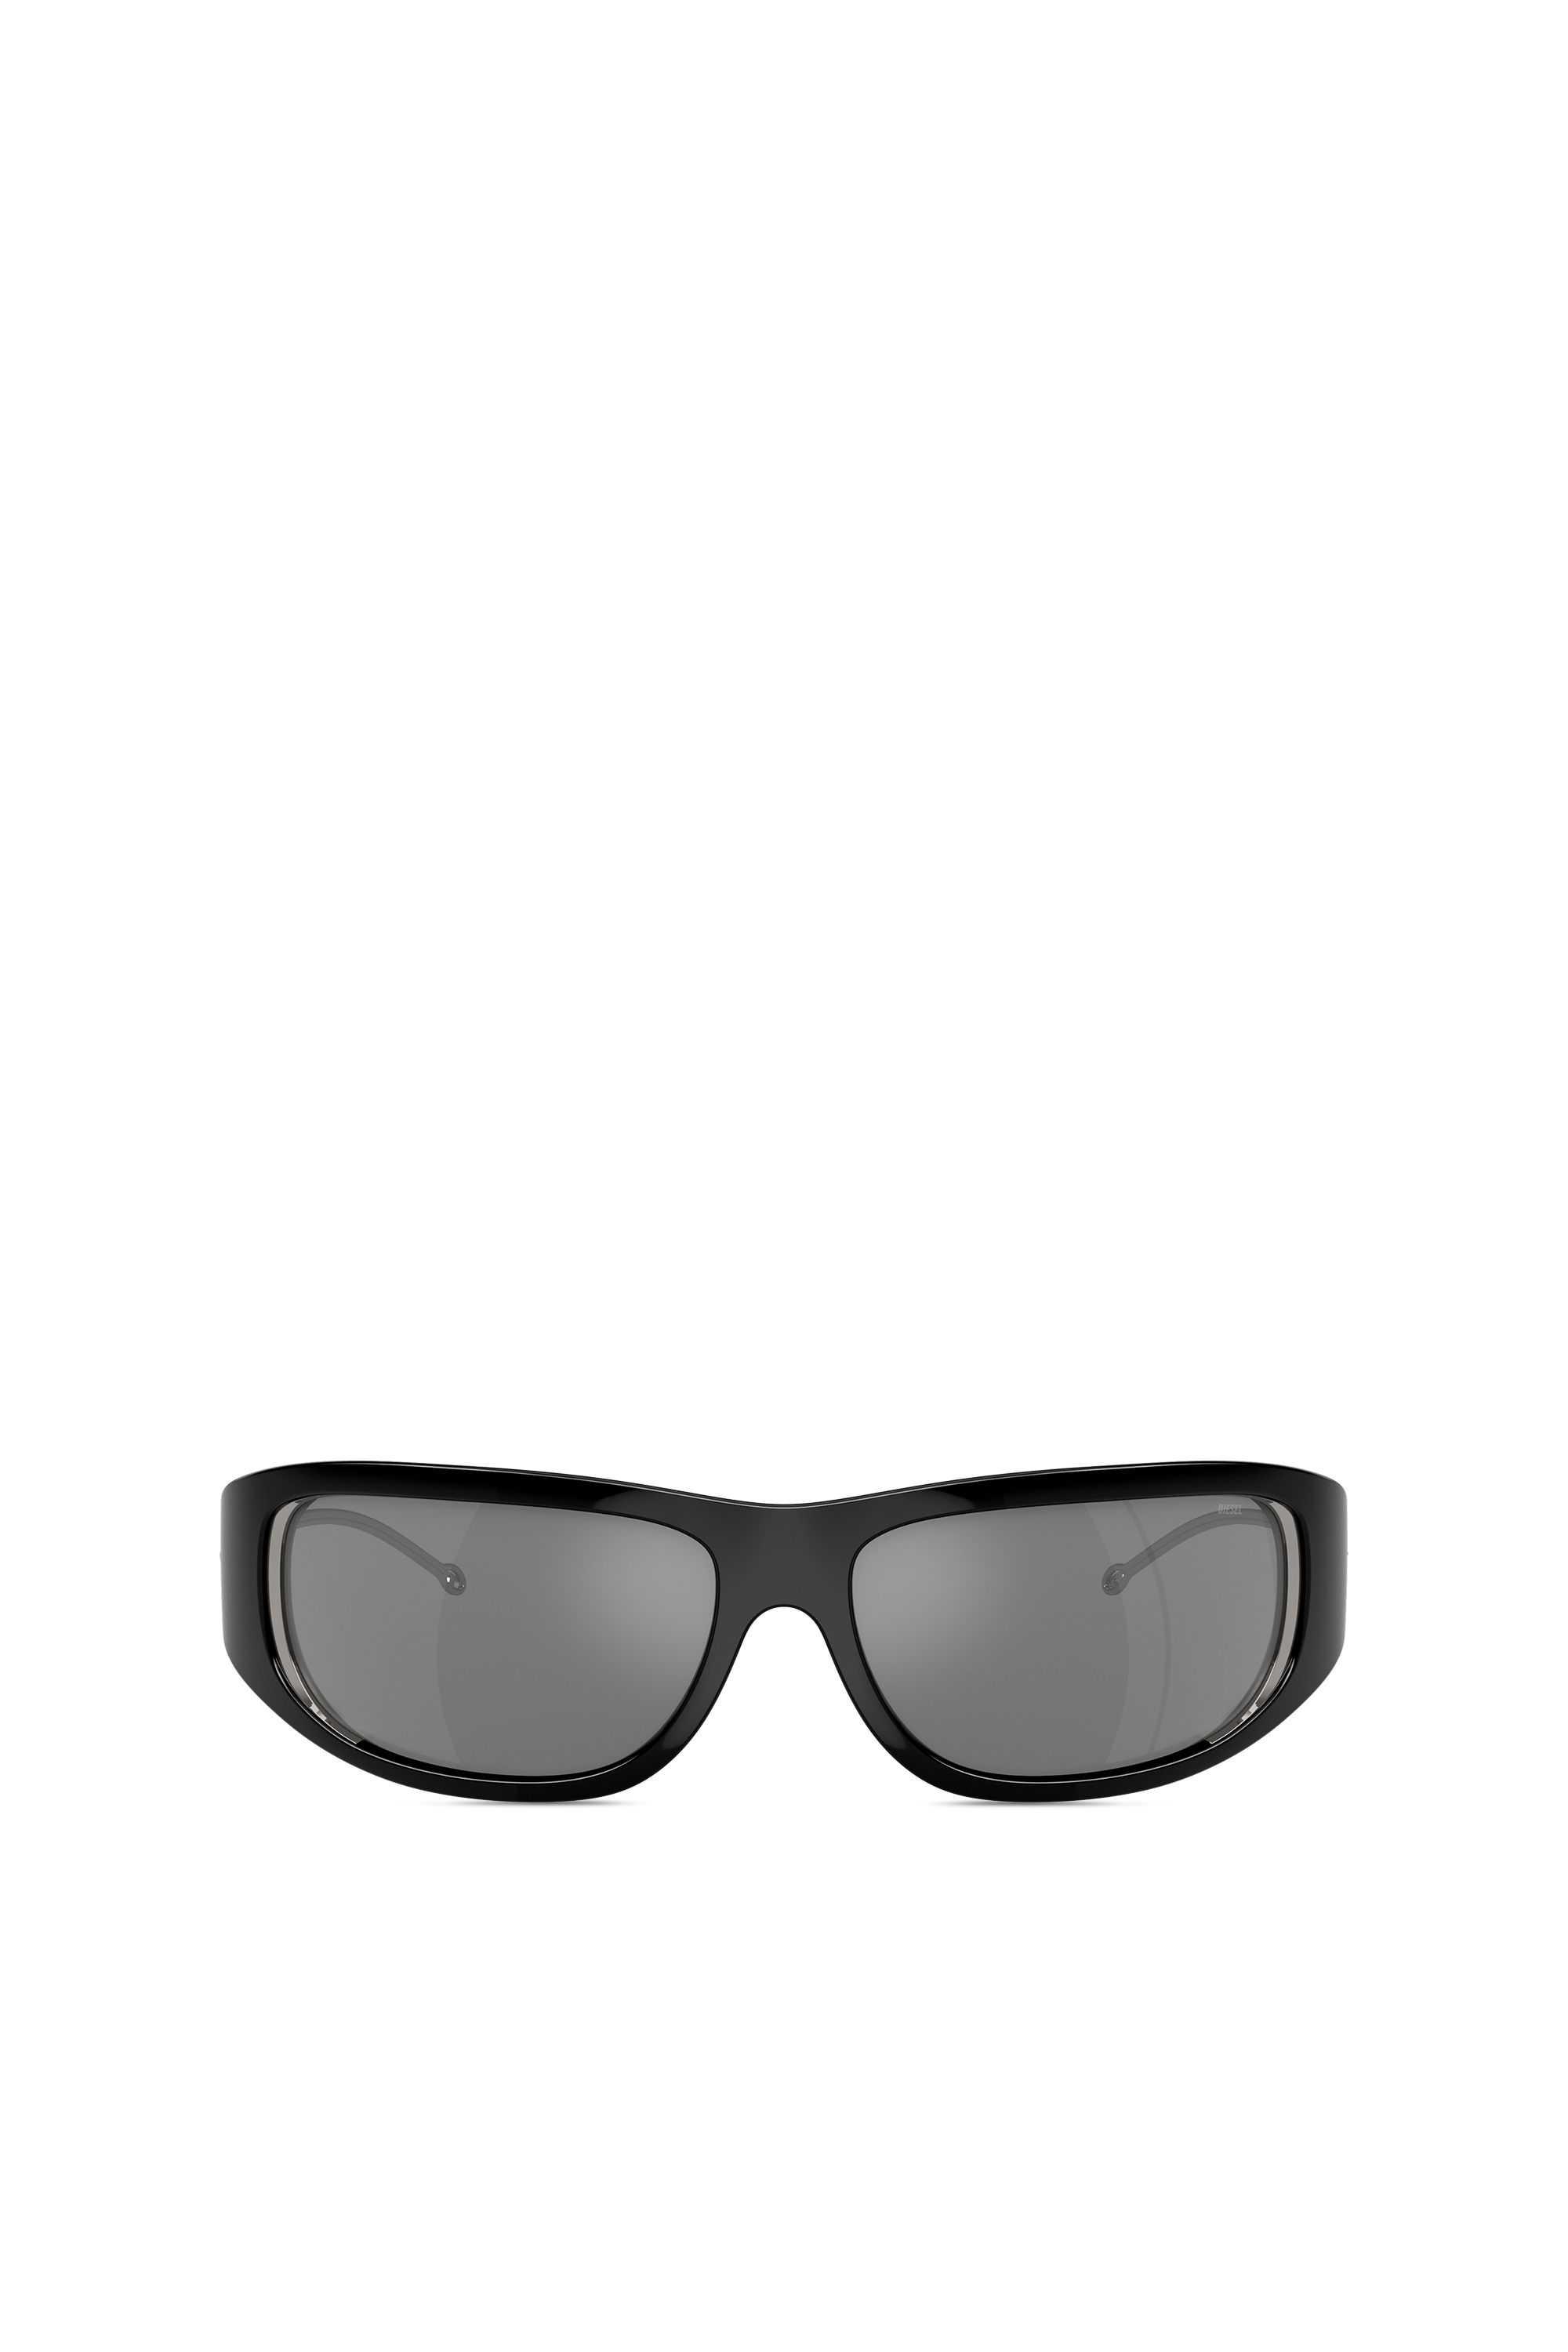 Diesel - Wraparound style sunglasses - Sunglasses - Unisex - Black